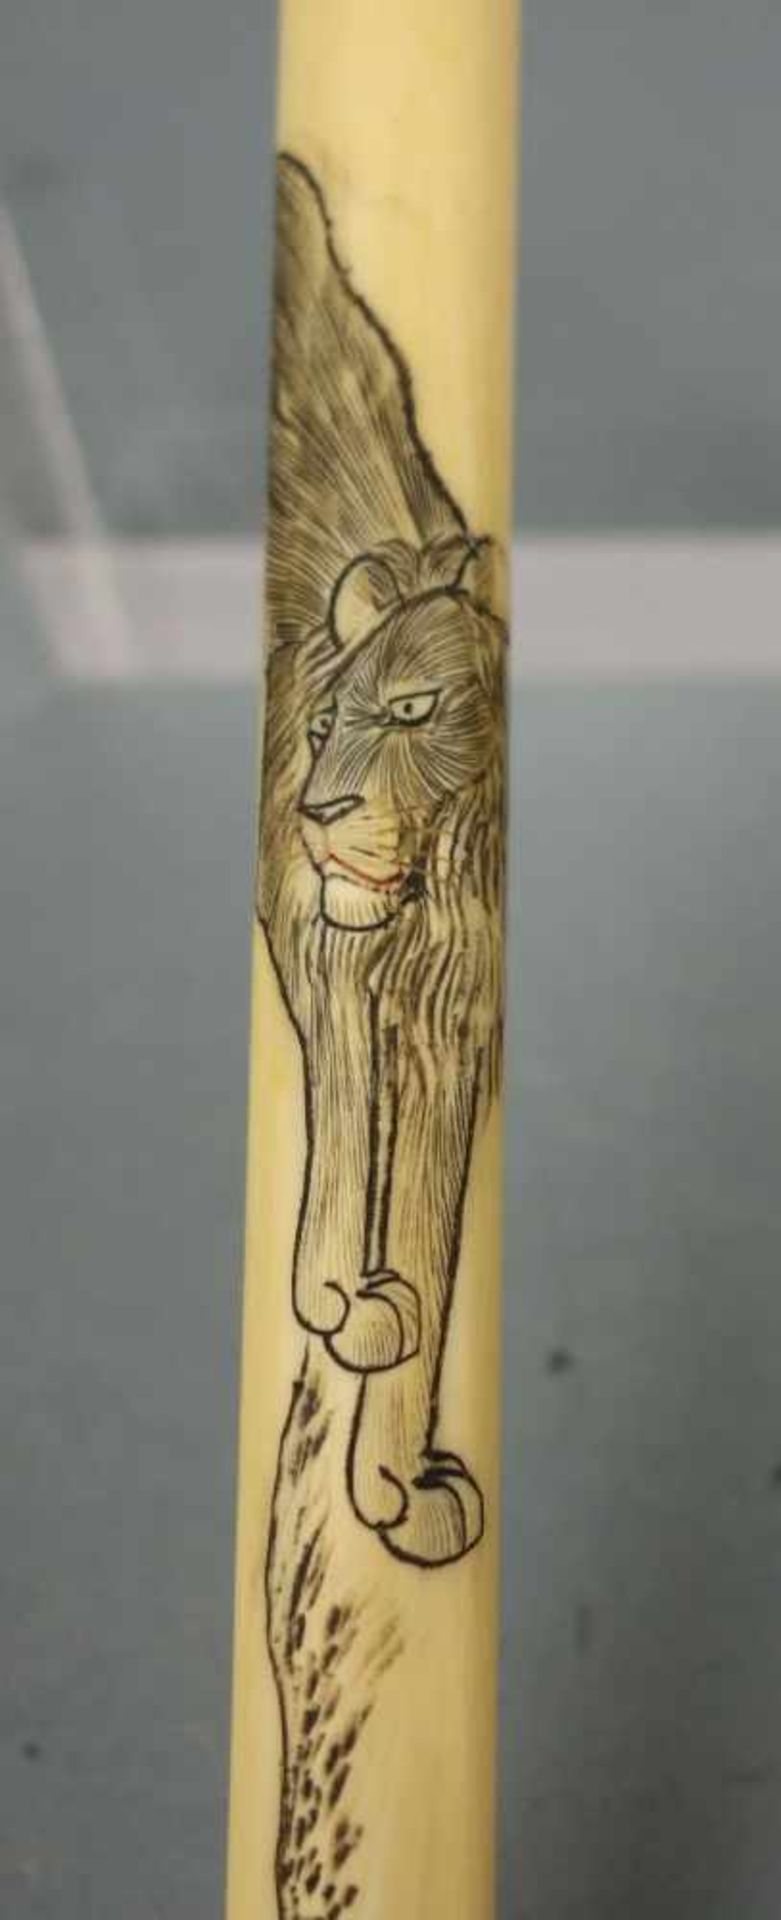 ZIGARETTENSPITZE MIT PANTHER - MOTIV / ivory cigarette holder with a black panther, Elfenbein, - Image 2 of 4